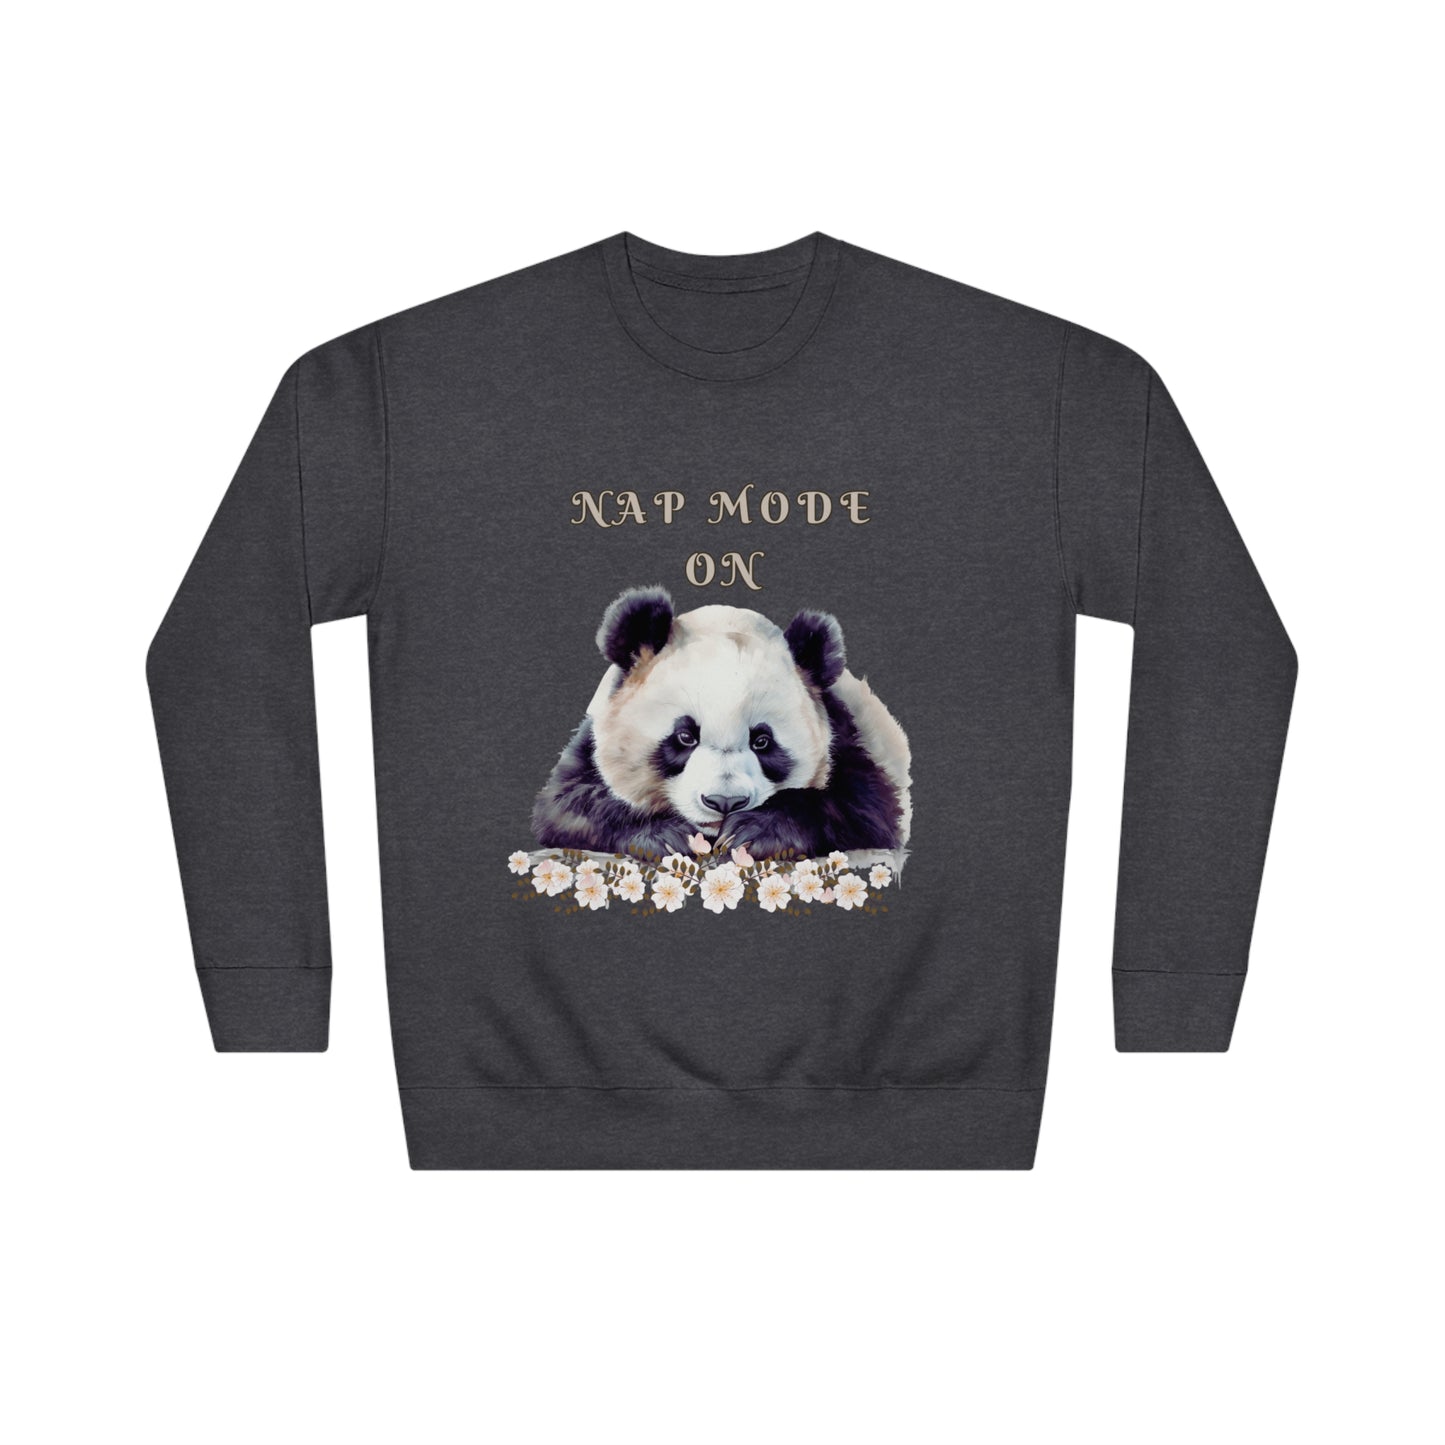 Lazy Panda Nap Mode Sweatshirt | Embrace Cozy Relaxation | Panda Lover Gift - Cozy Sweatshirt Sweatshirt Charcoal Heather S 